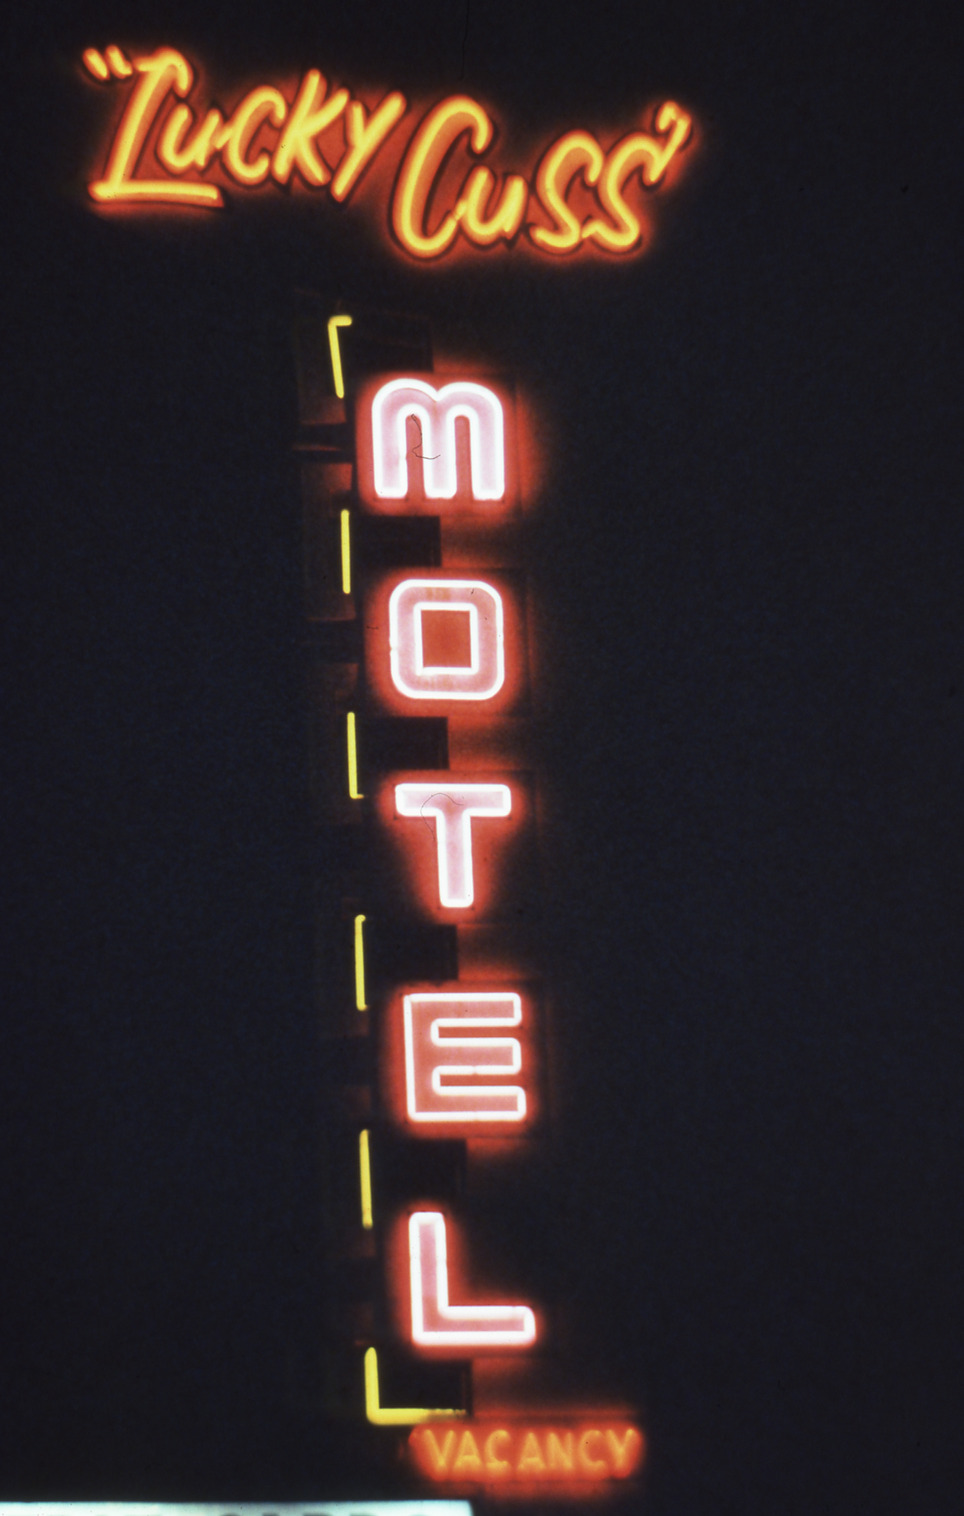 Lucky Cuss Motel sign, Las Vegas, Nevada: photographic print